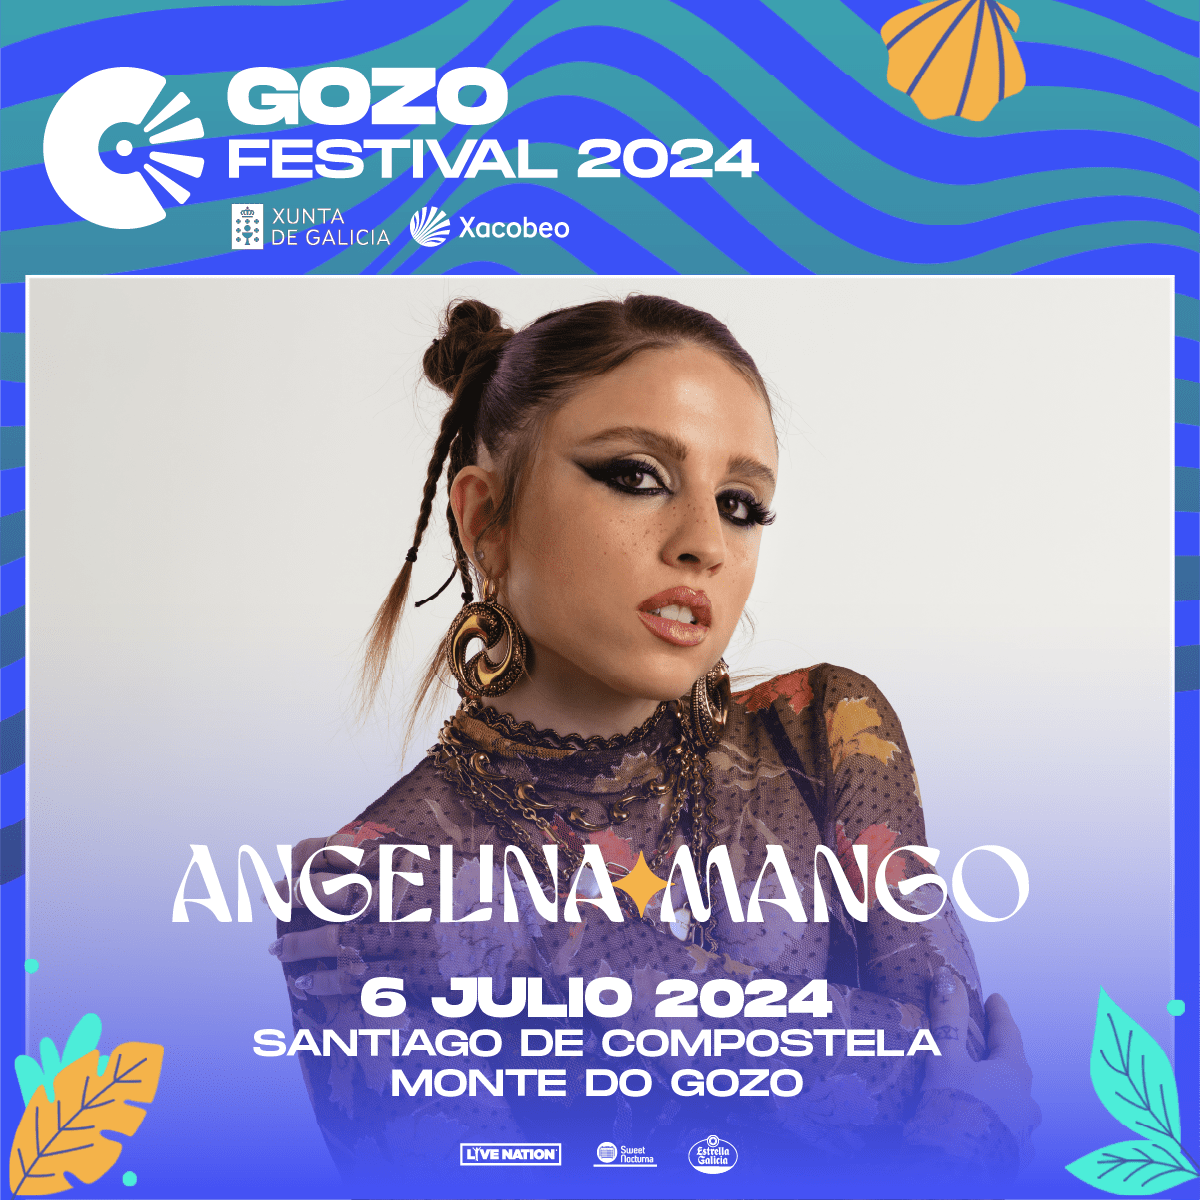 Angelina Mango, a O Gozo Festival 2024